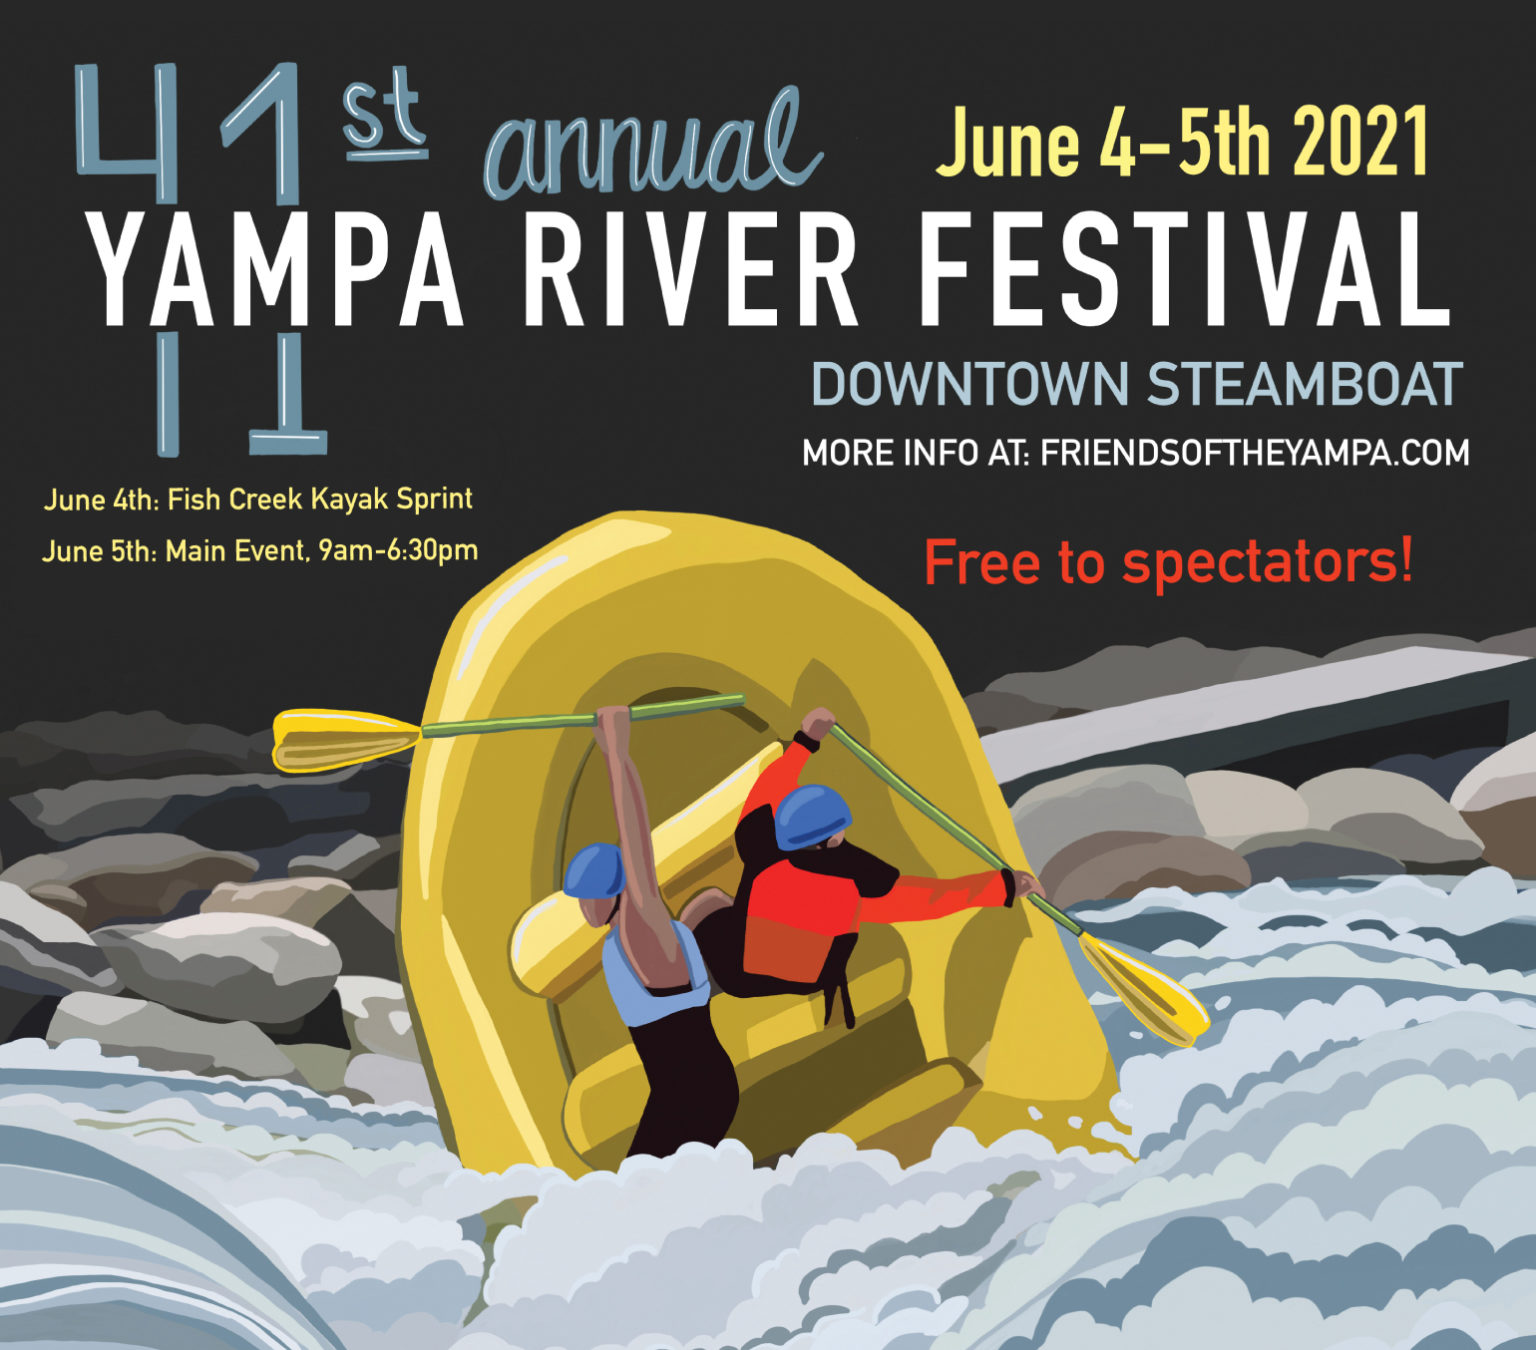 Yampa River Festival Friends of the Yampa